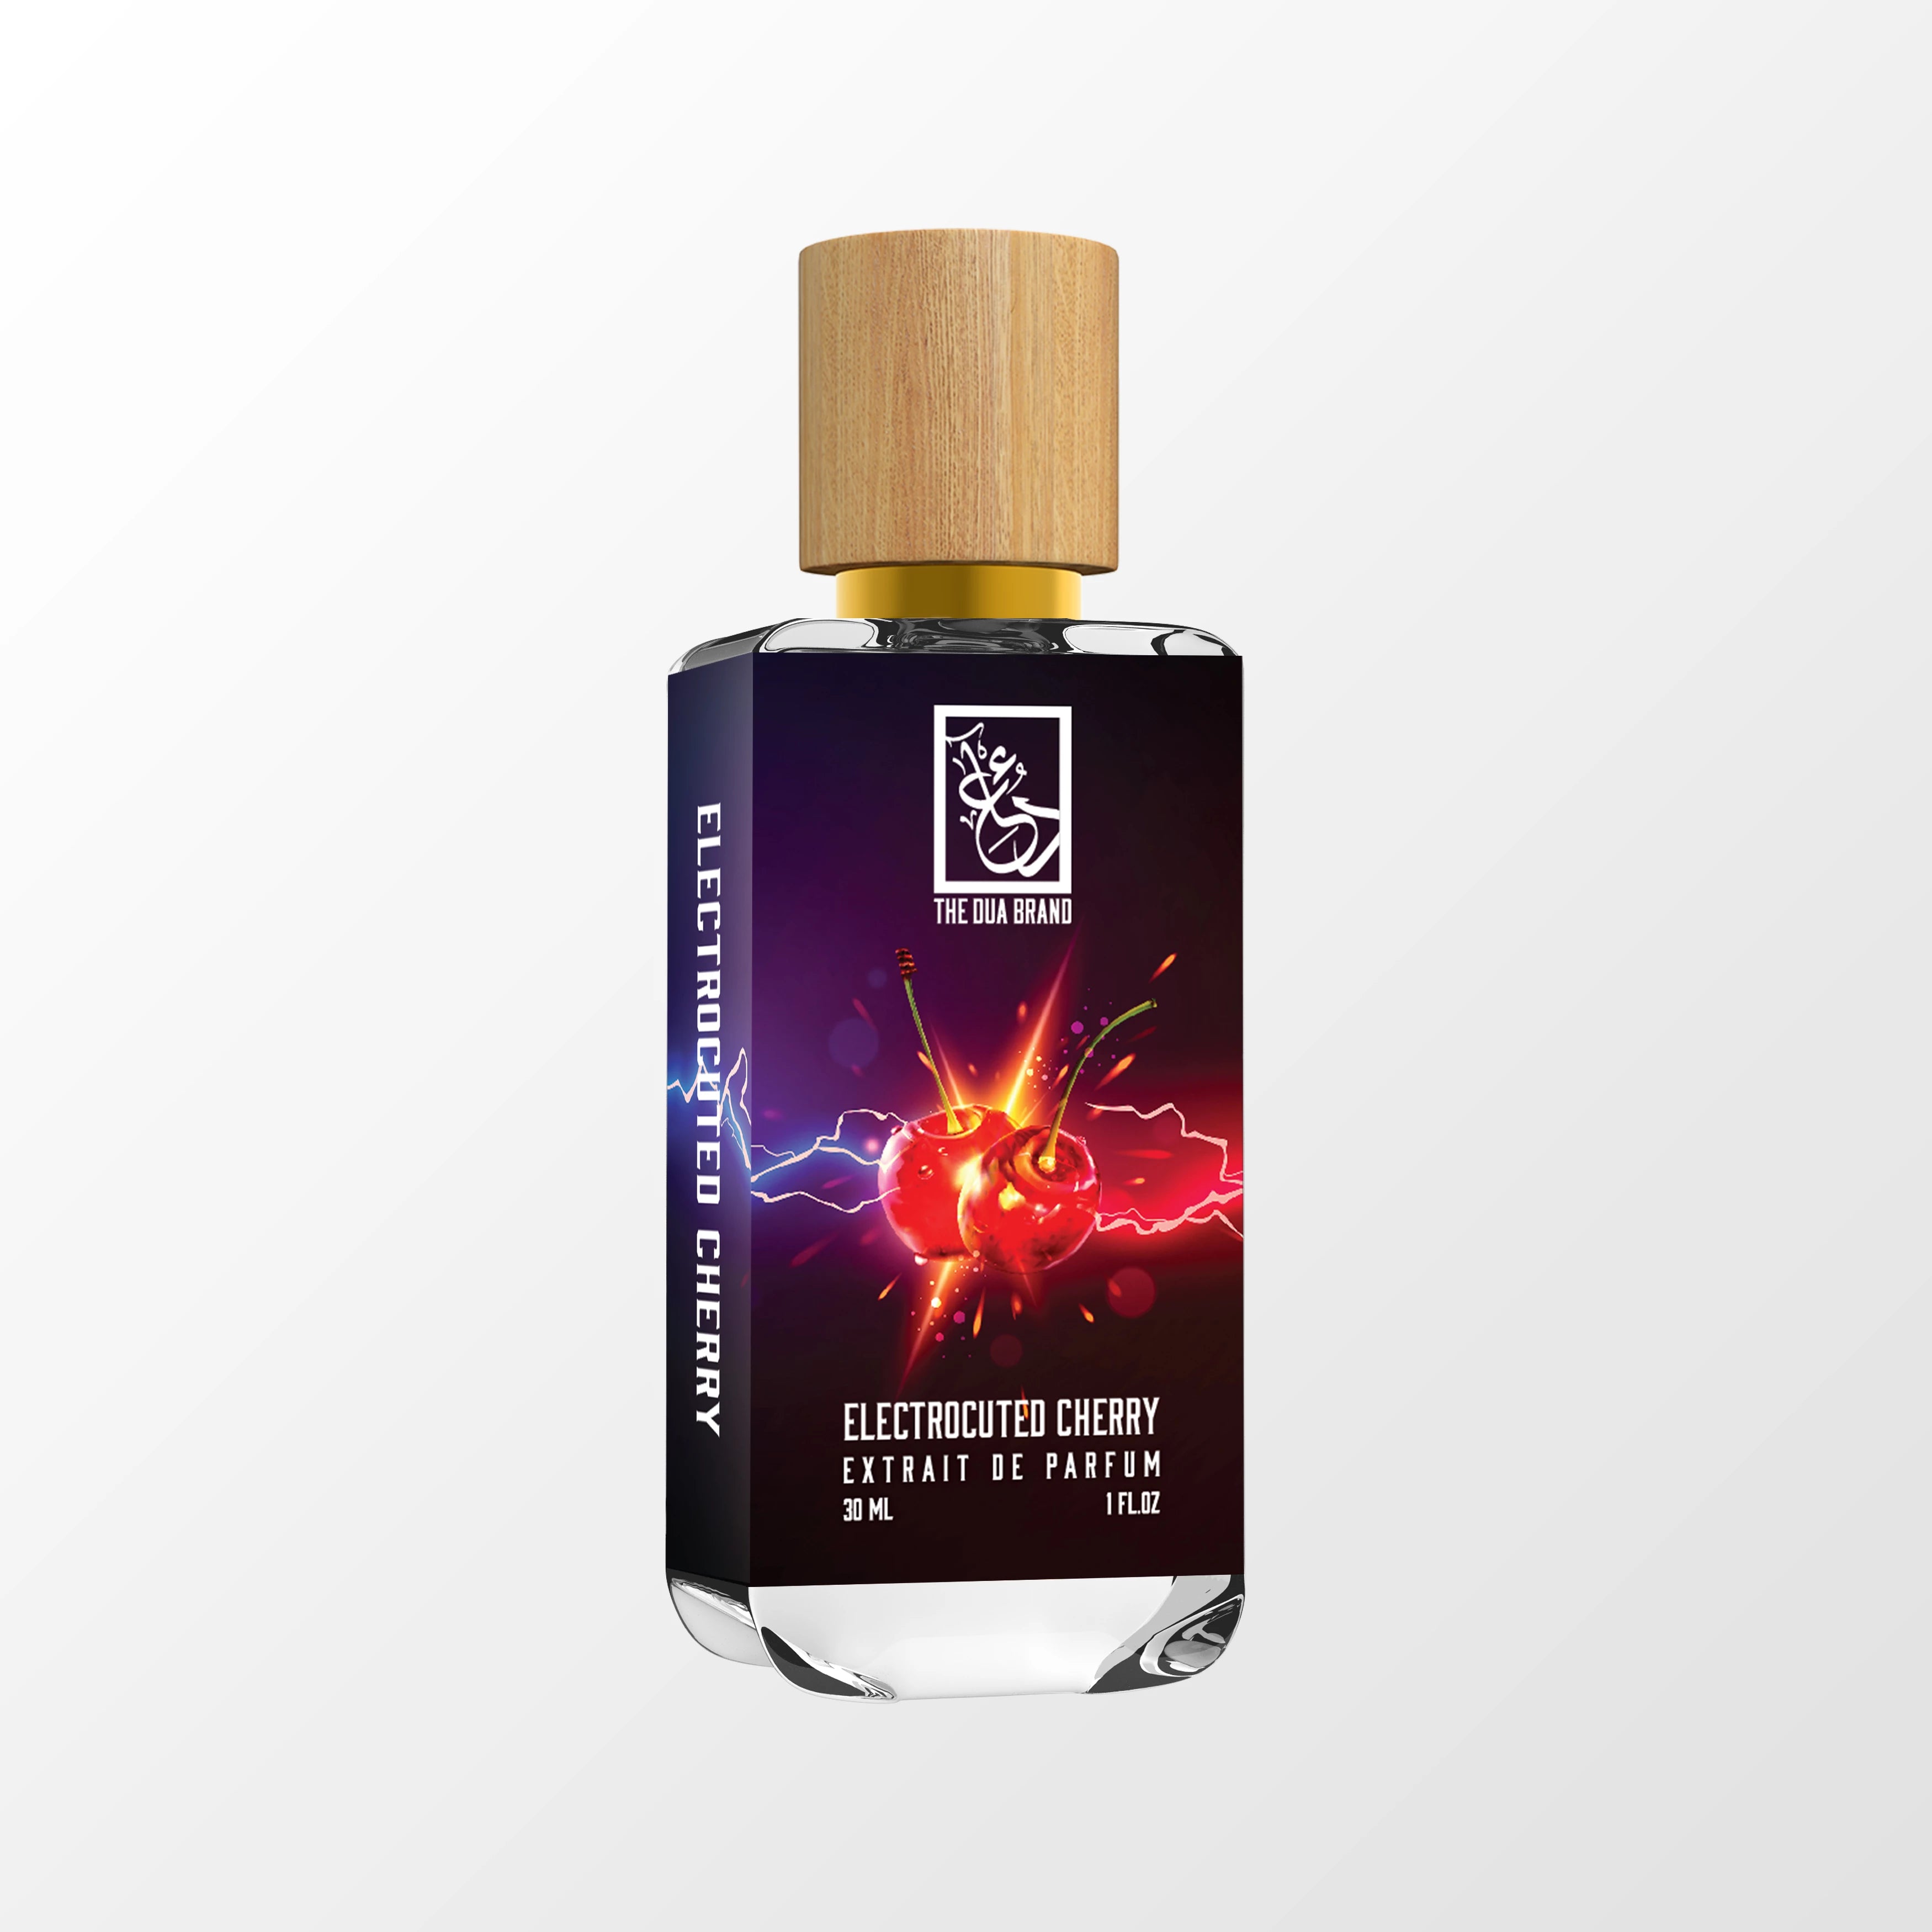 Electrocuted Cherry - DUA FRAGRANCES - Inspired by Electric Cherry Tom Ford  - Unisex Perfume - 34ml/1.1 FL OZ - Extrait De Parfum